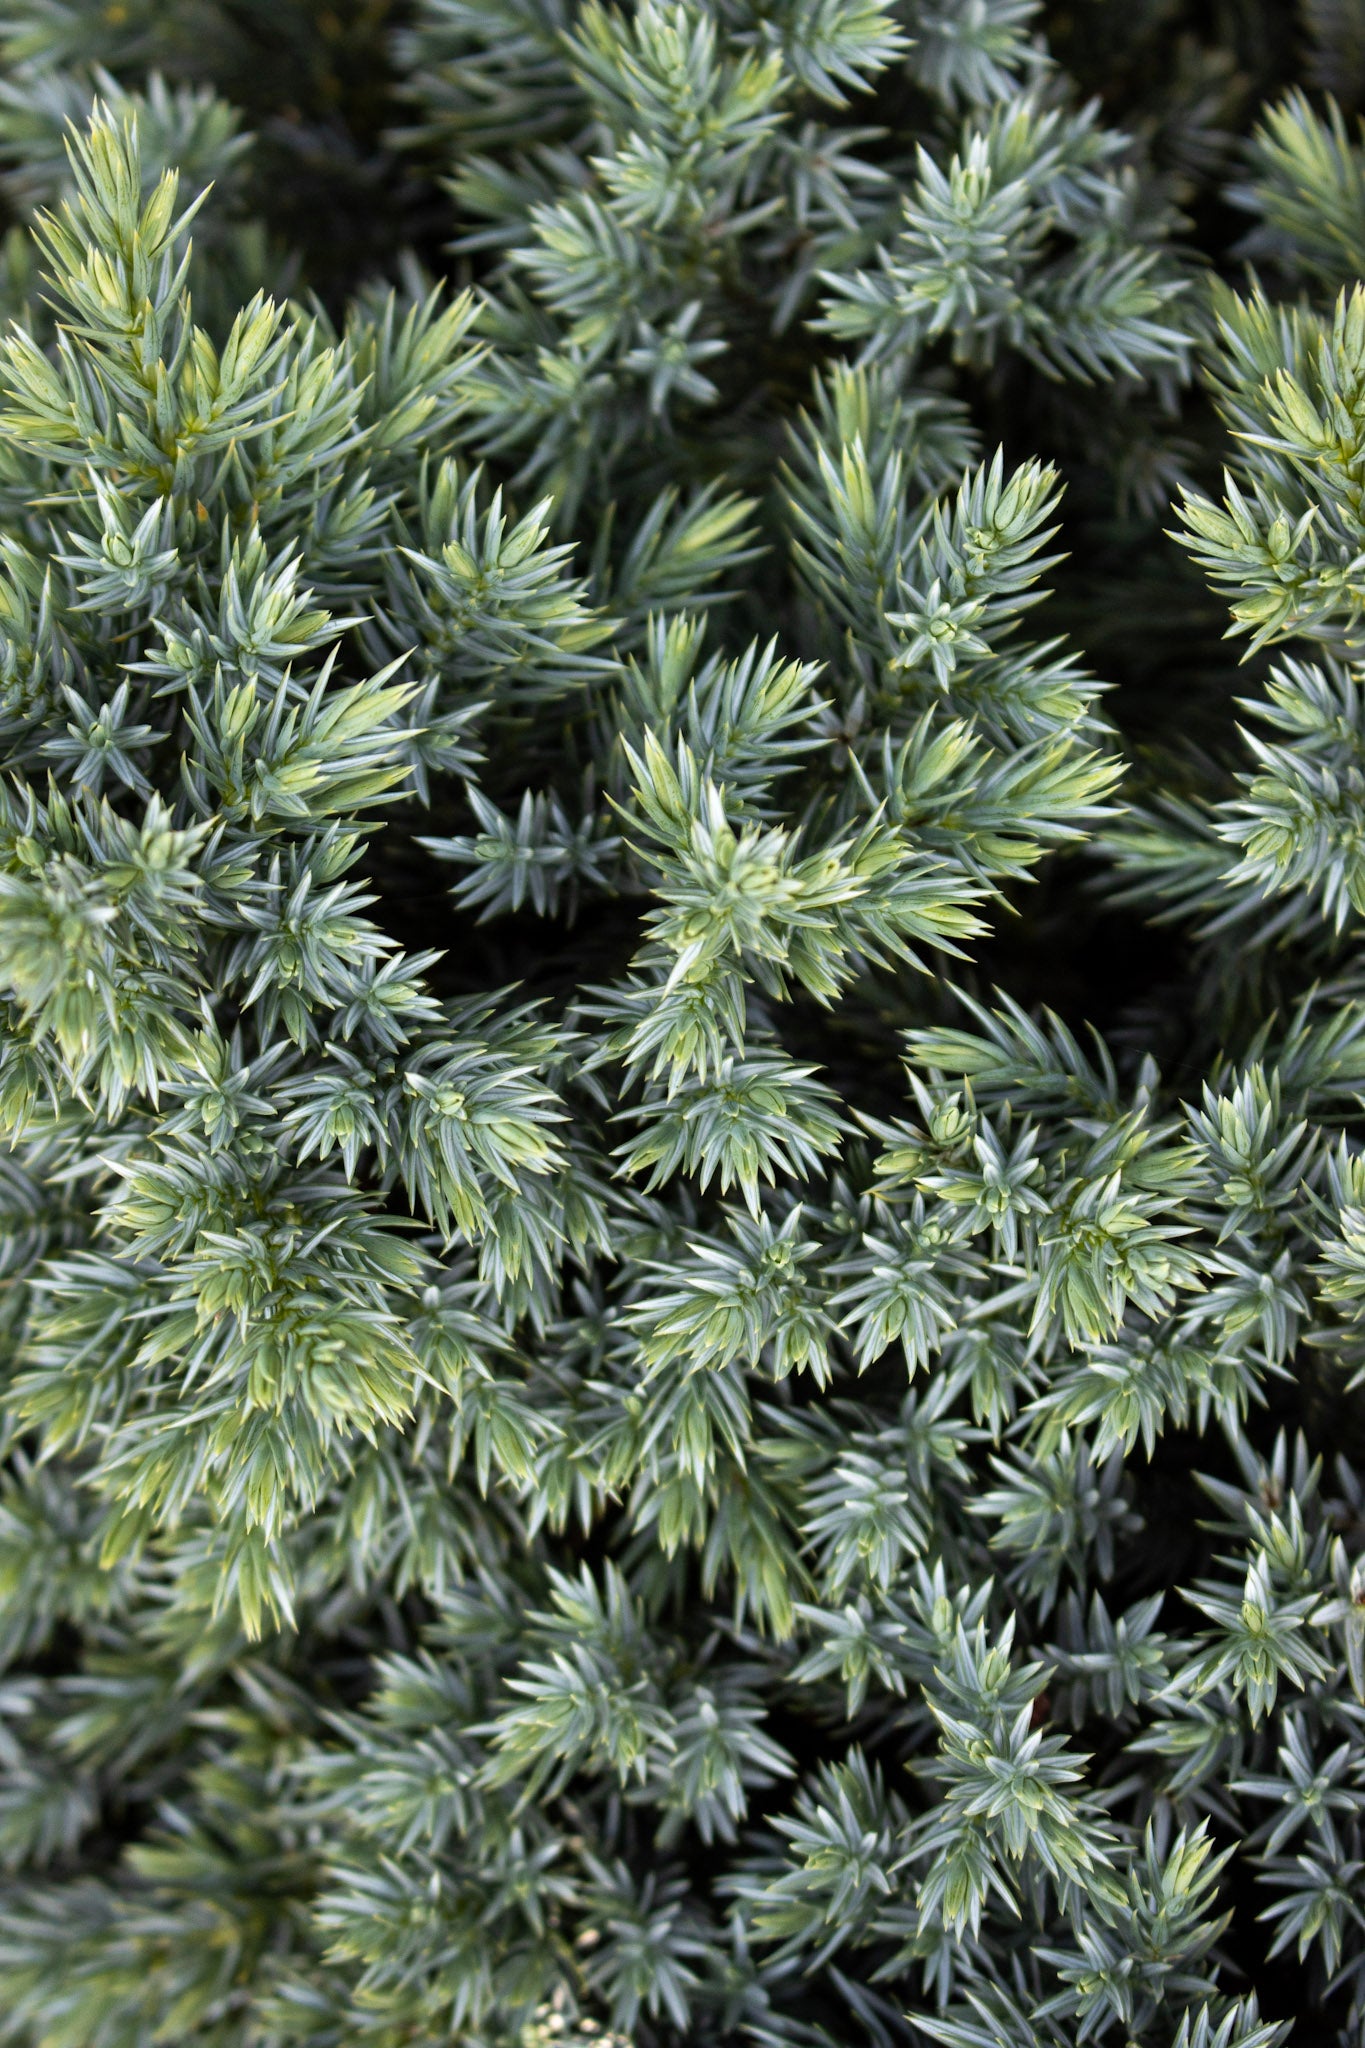 Juniperus Blue Star 3 gal